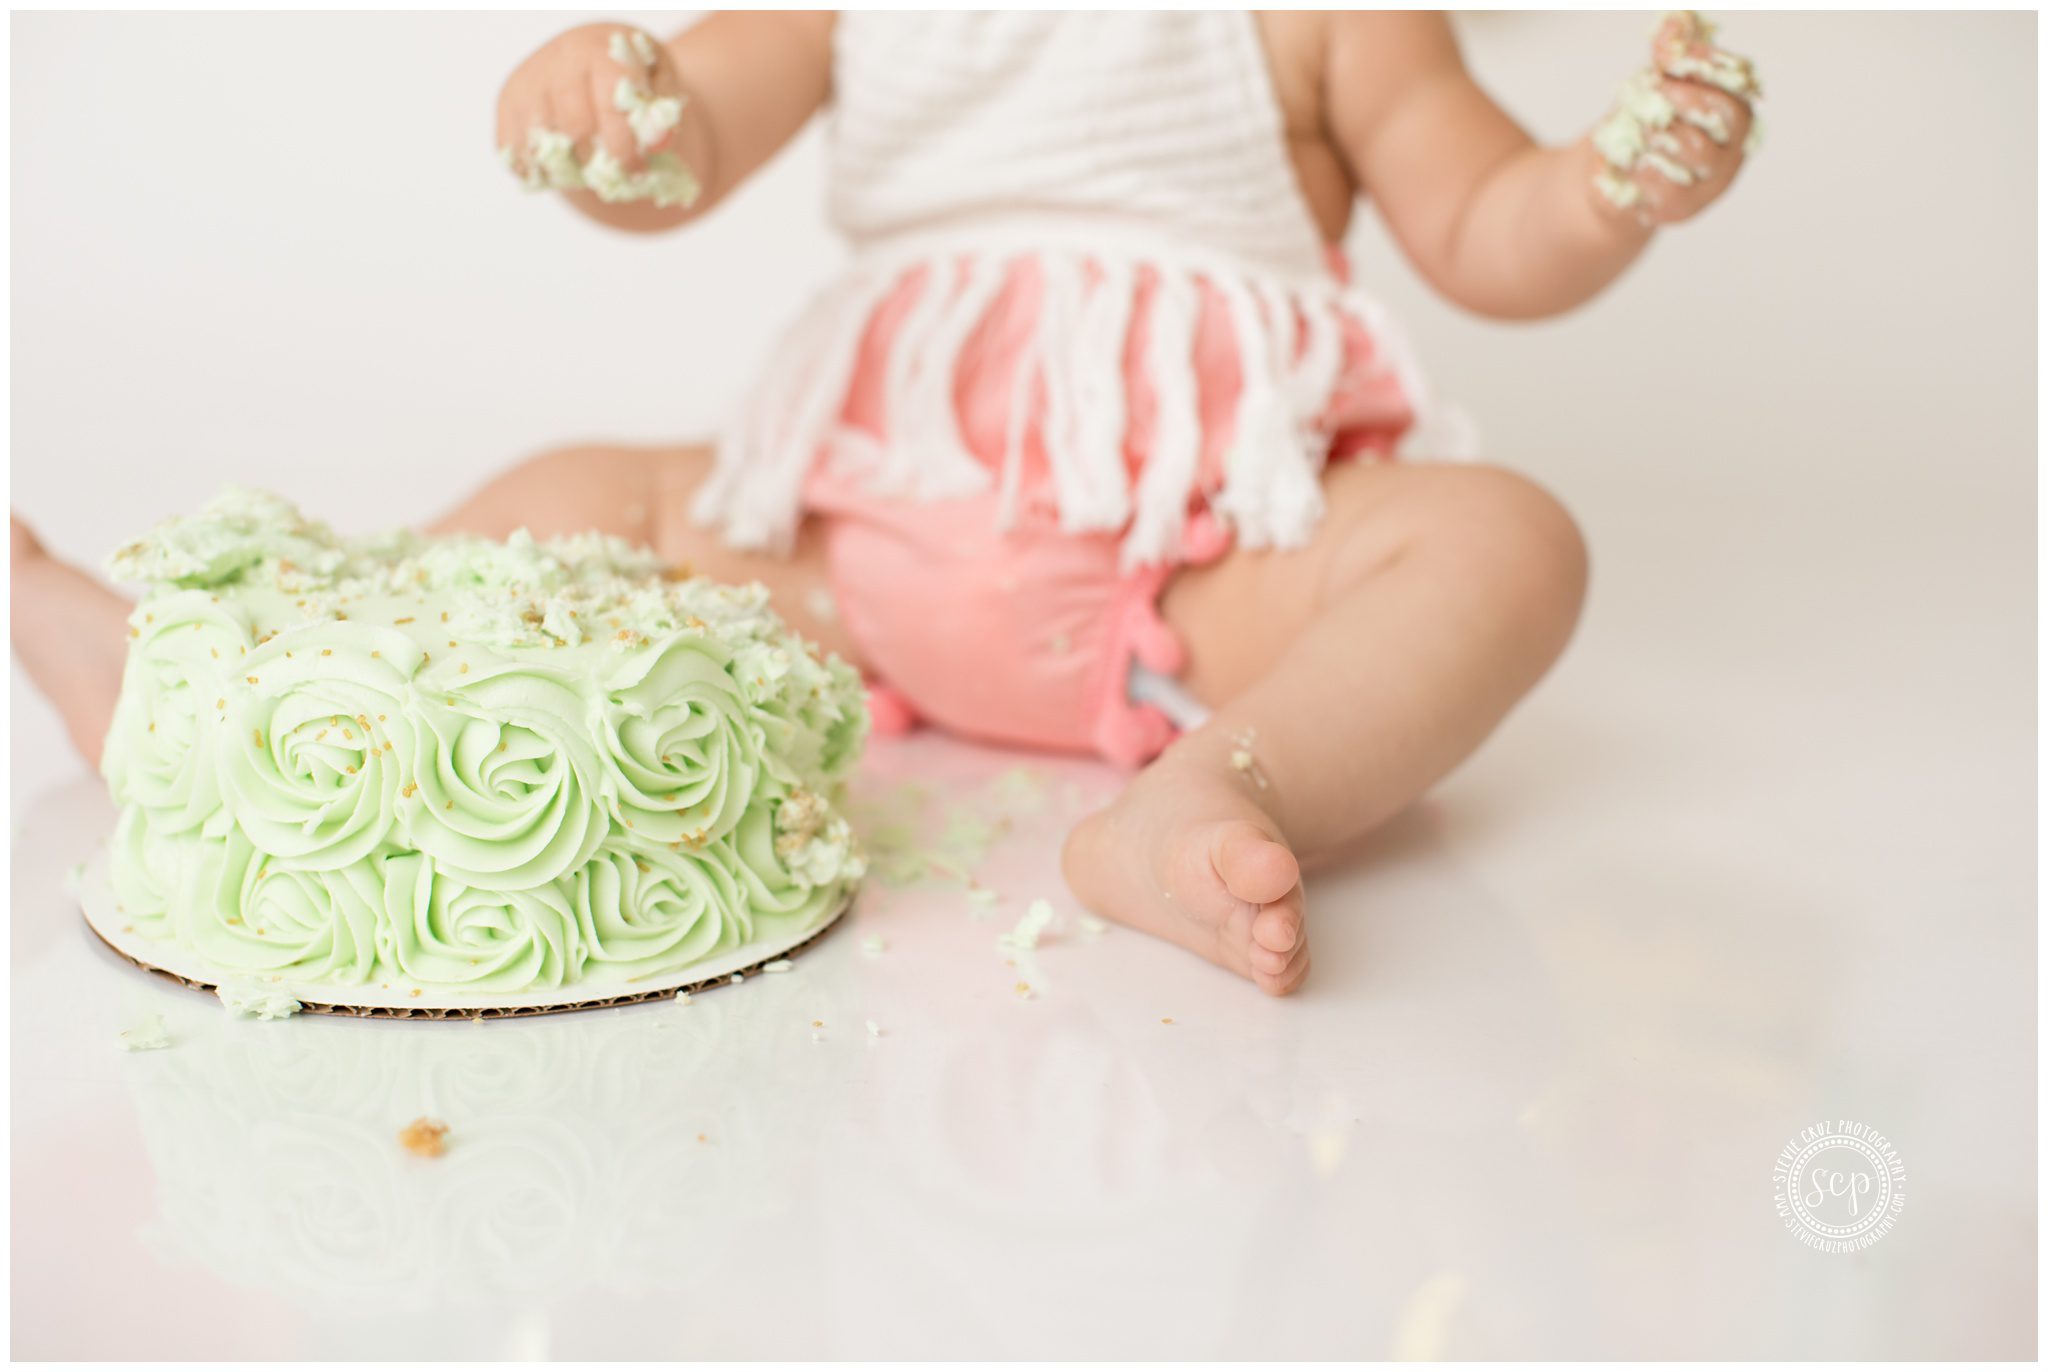 Cake smash photo ideas and inspiration for girls. 